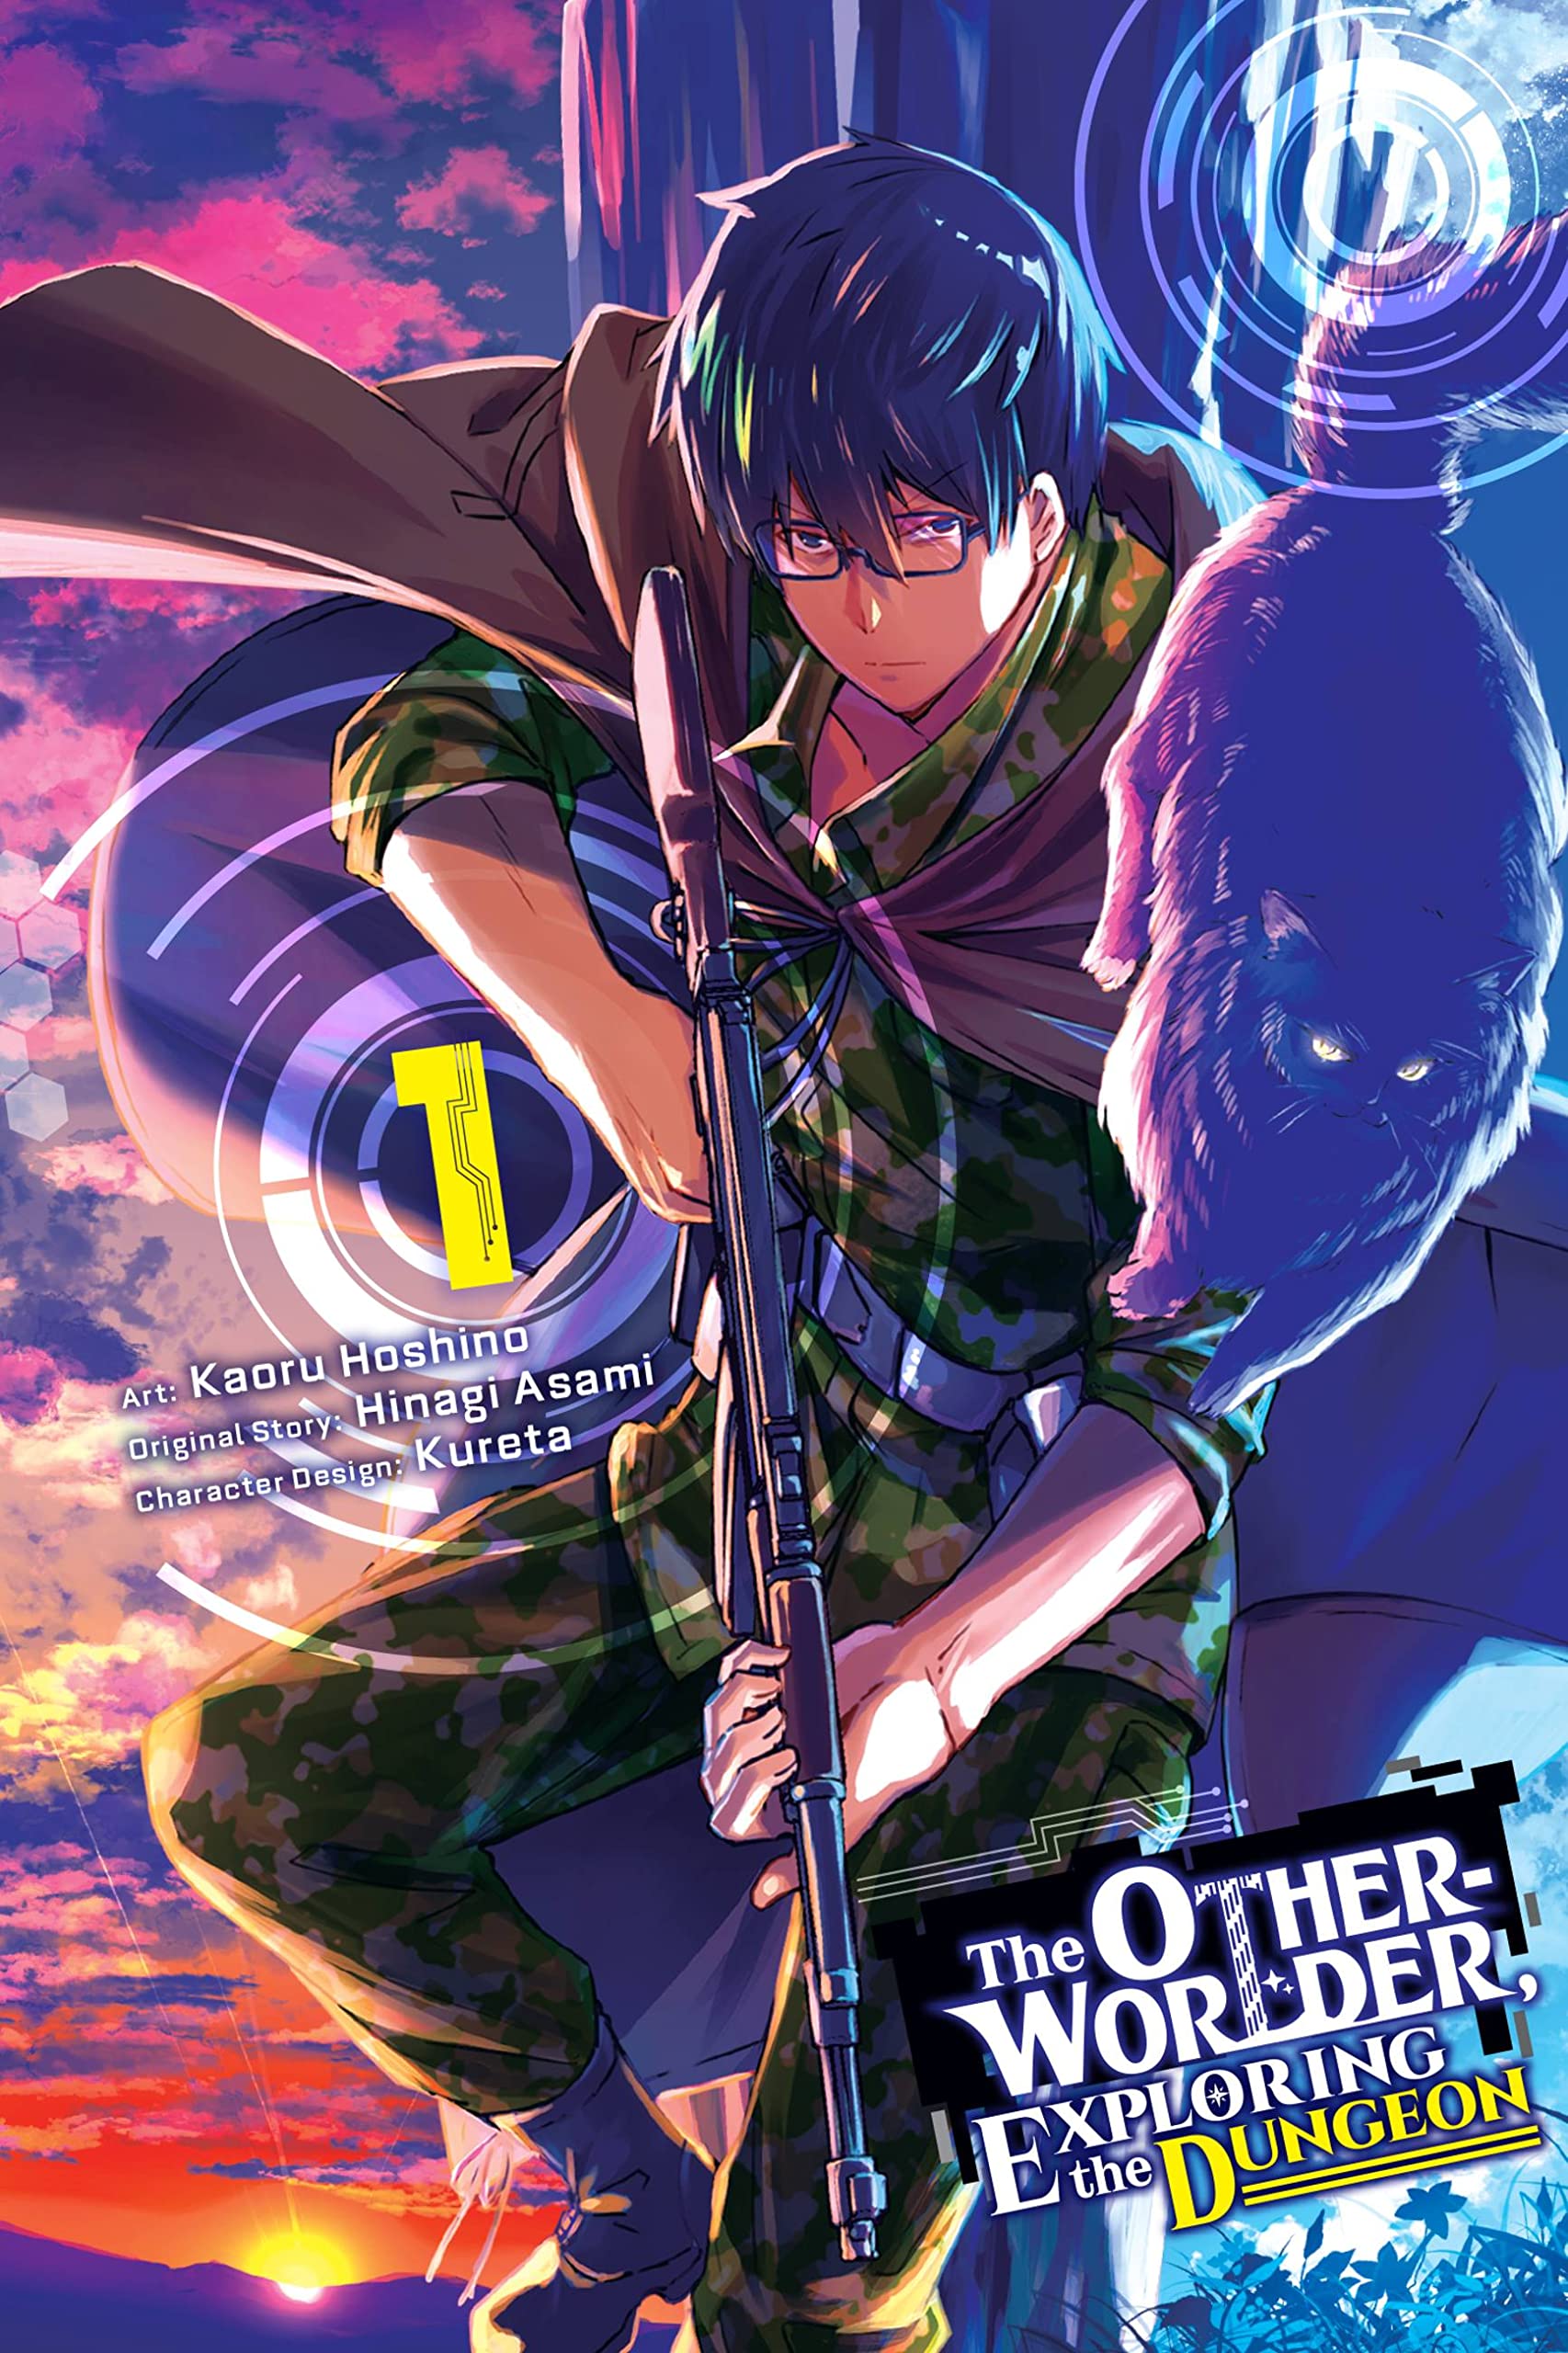 The Otherworlder, Exploring the Dungeon (Manga) Vol. 01